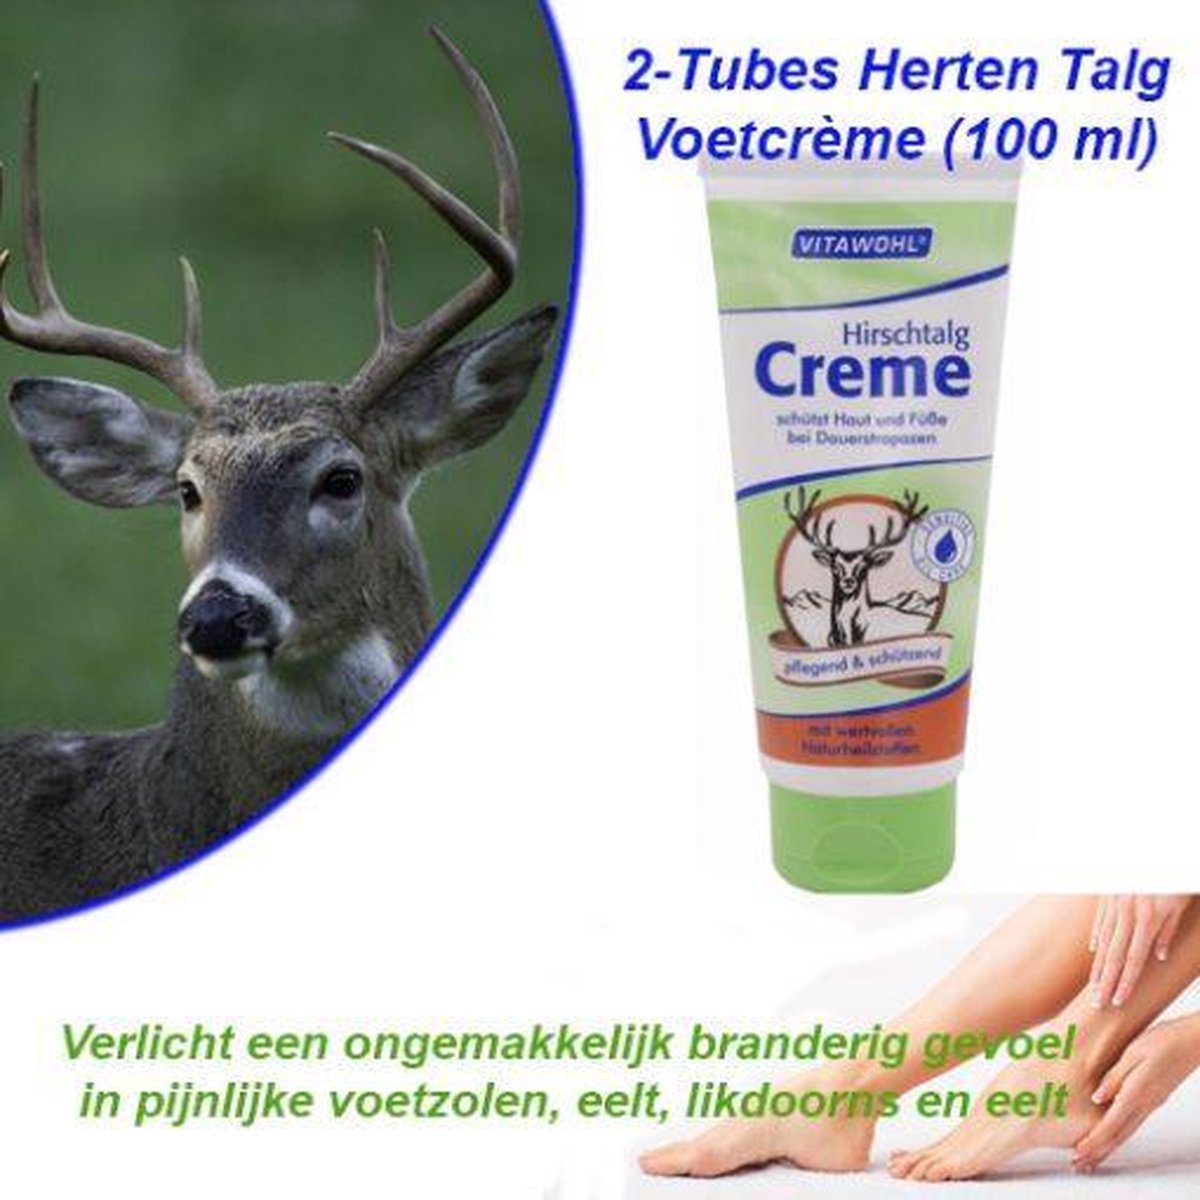 2-Tubes Herten Talg Voetcrème (100 ml)